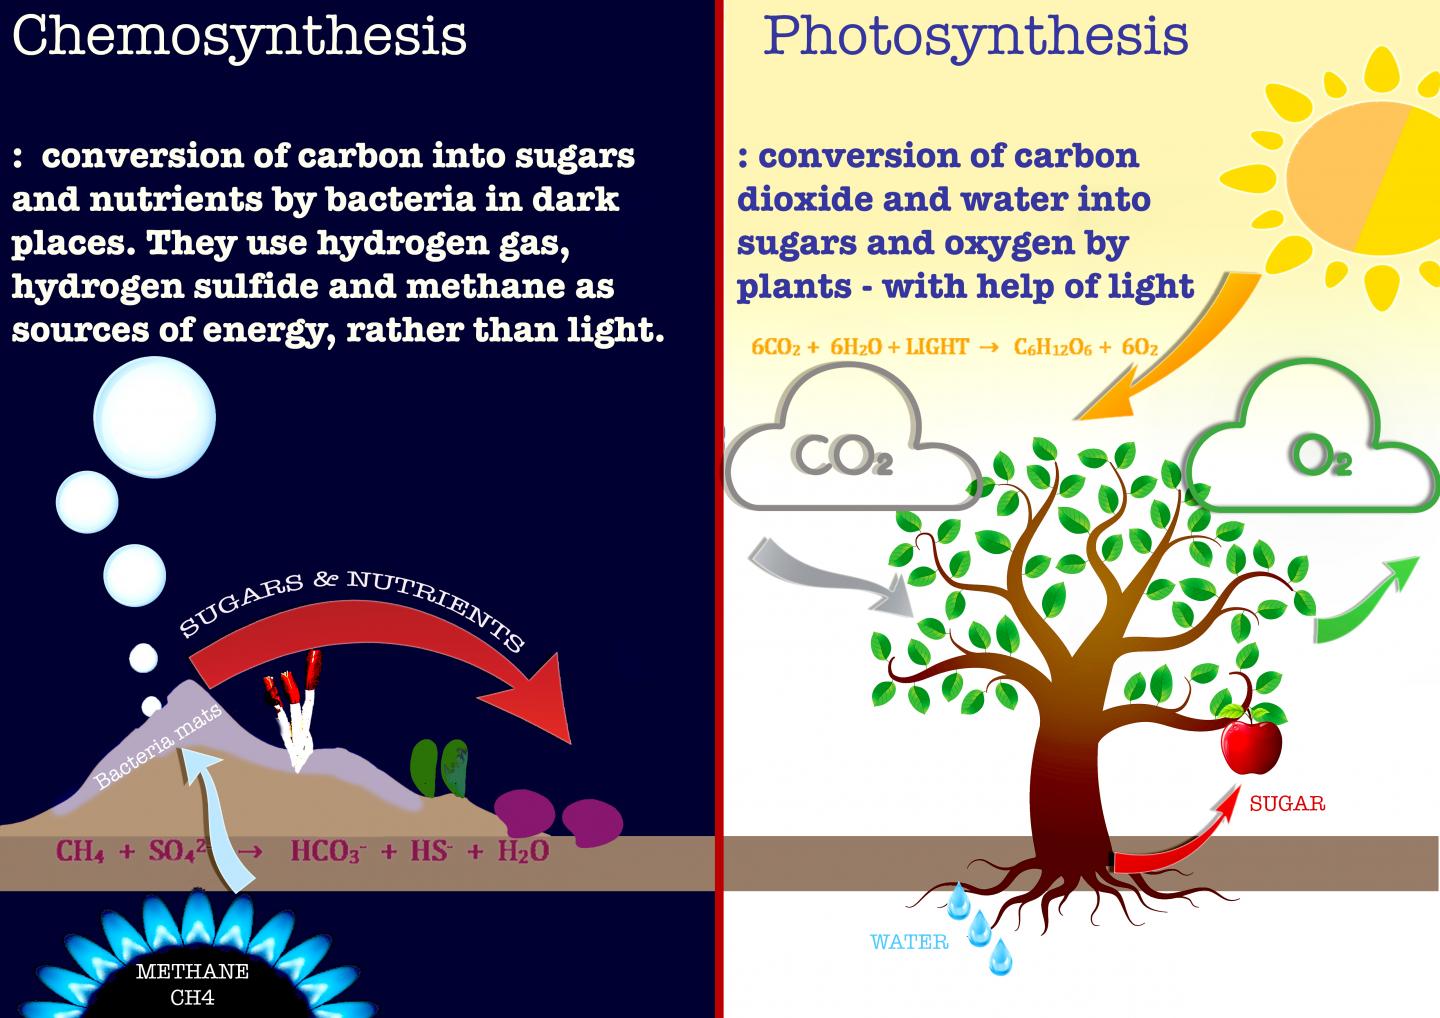 Chemosynthesis vs. Photosynthesis